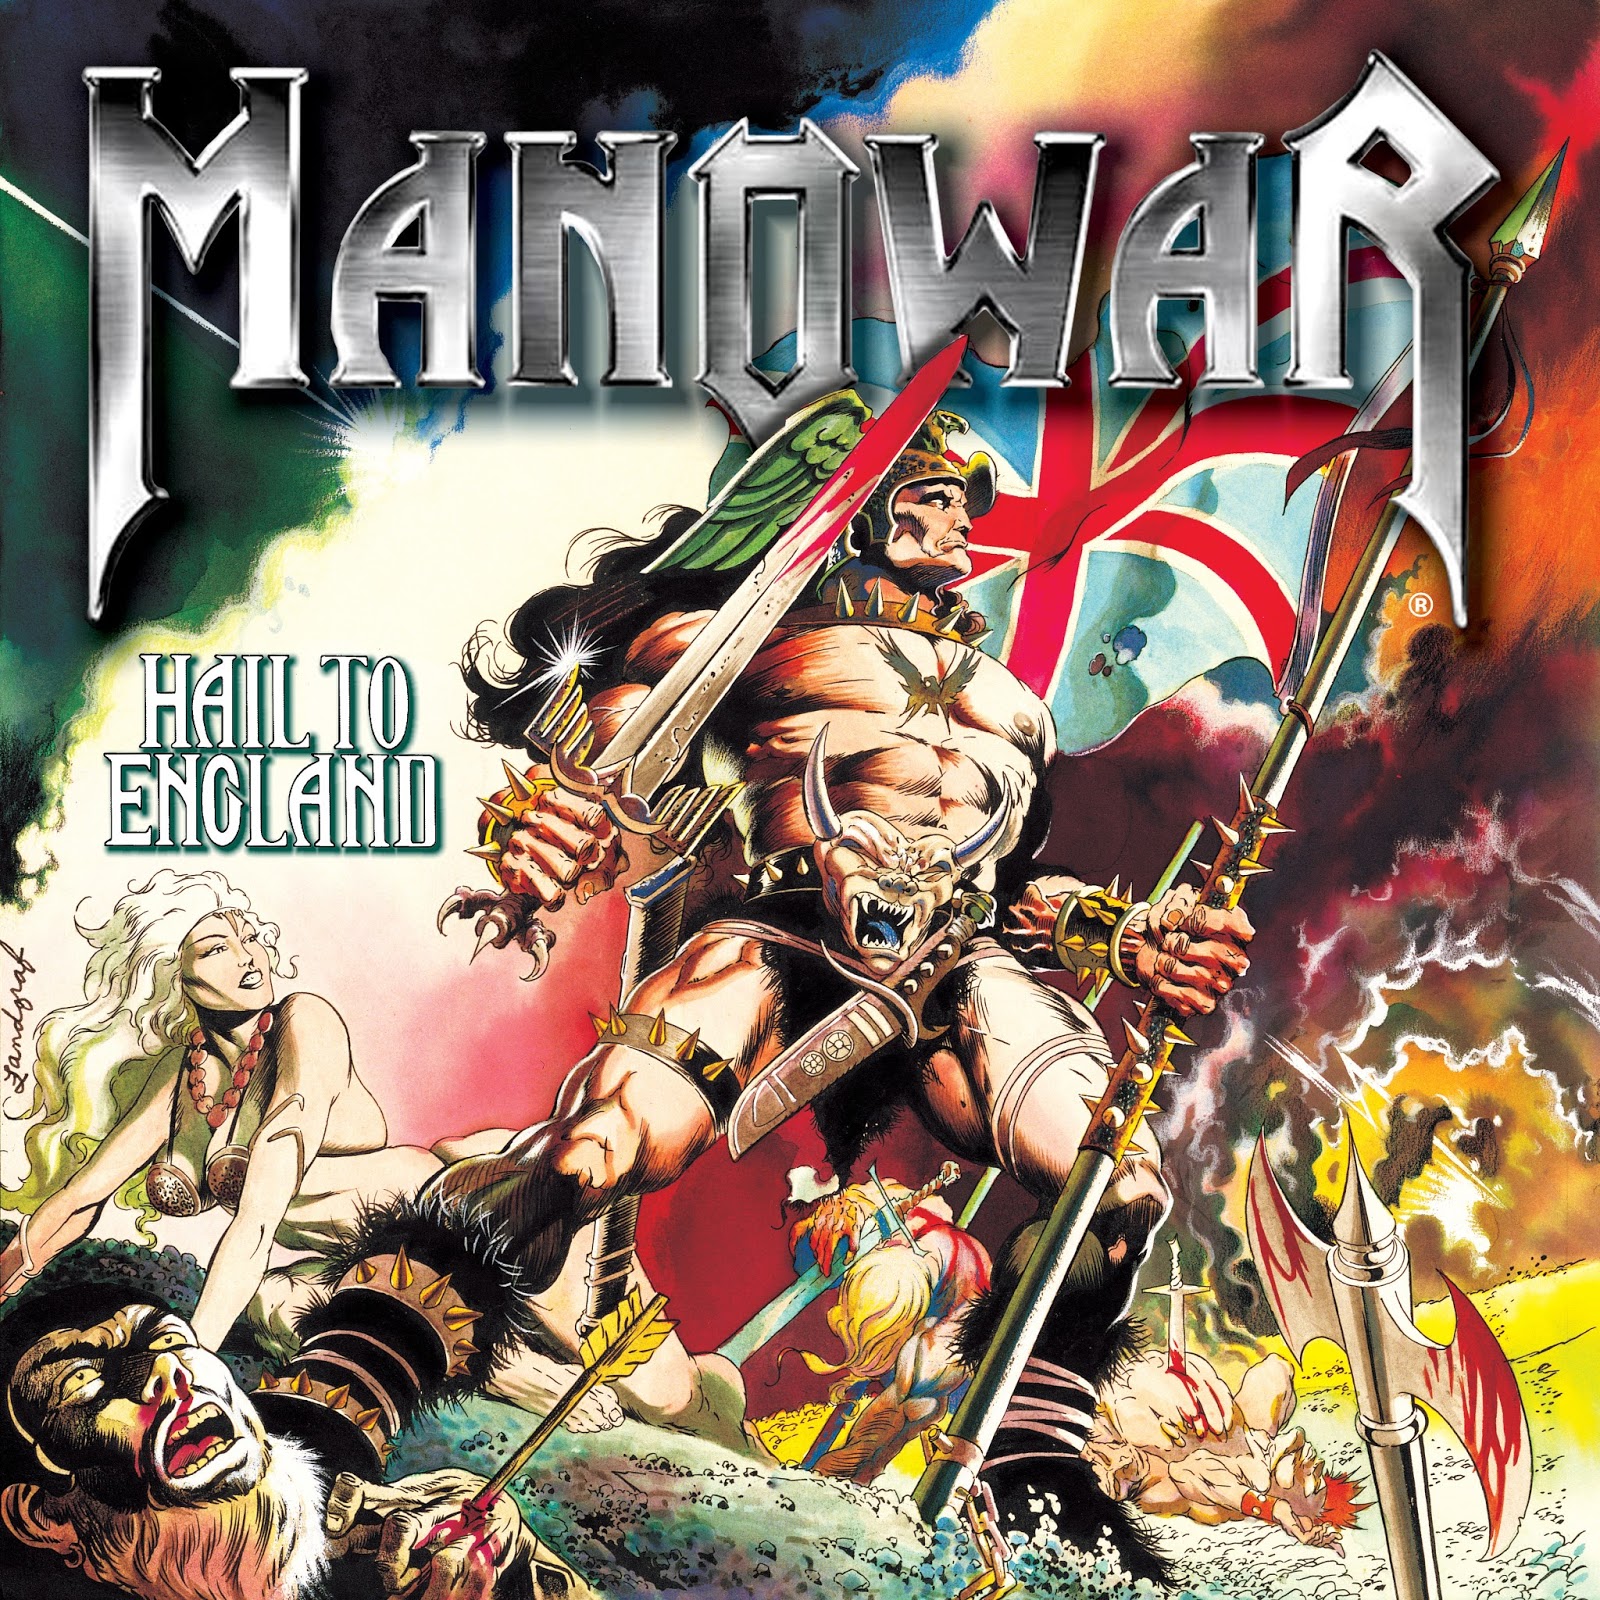 Manowar united warriors. Постеры группы Manowar. Группа Manowar обложки. Manowar Band 1984. Альбомы группы мановар.